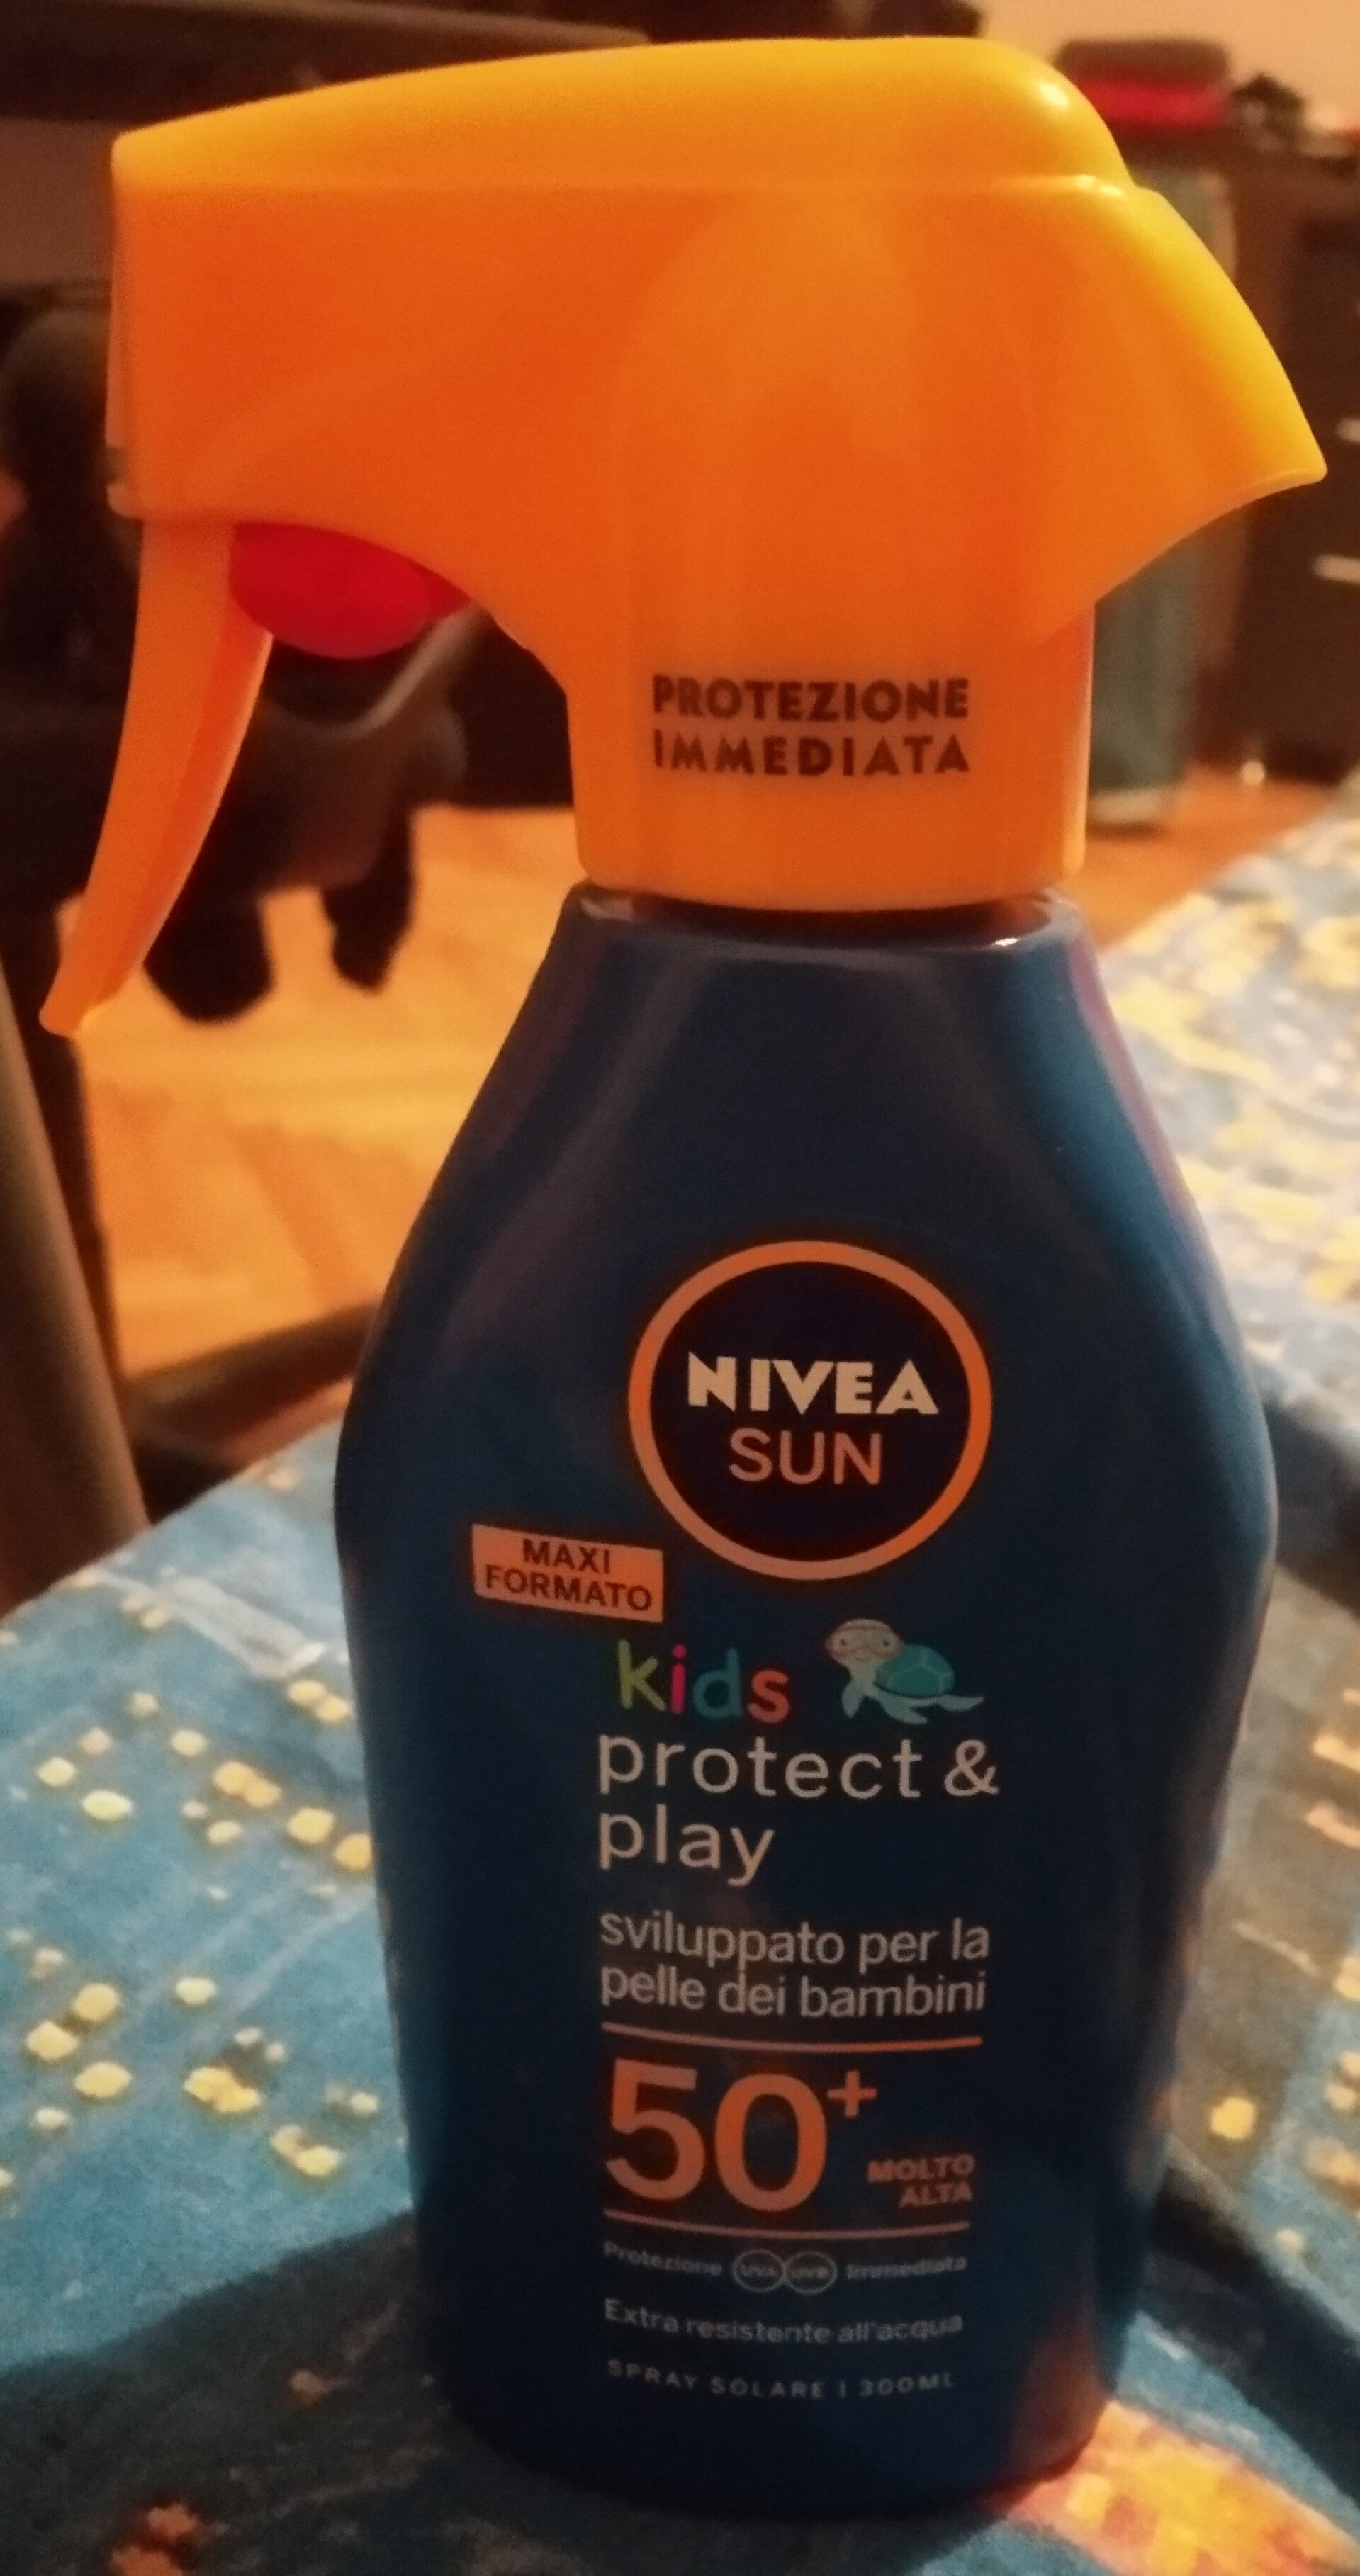 Nivea sun kids protect & play 50+ - Продукт - it